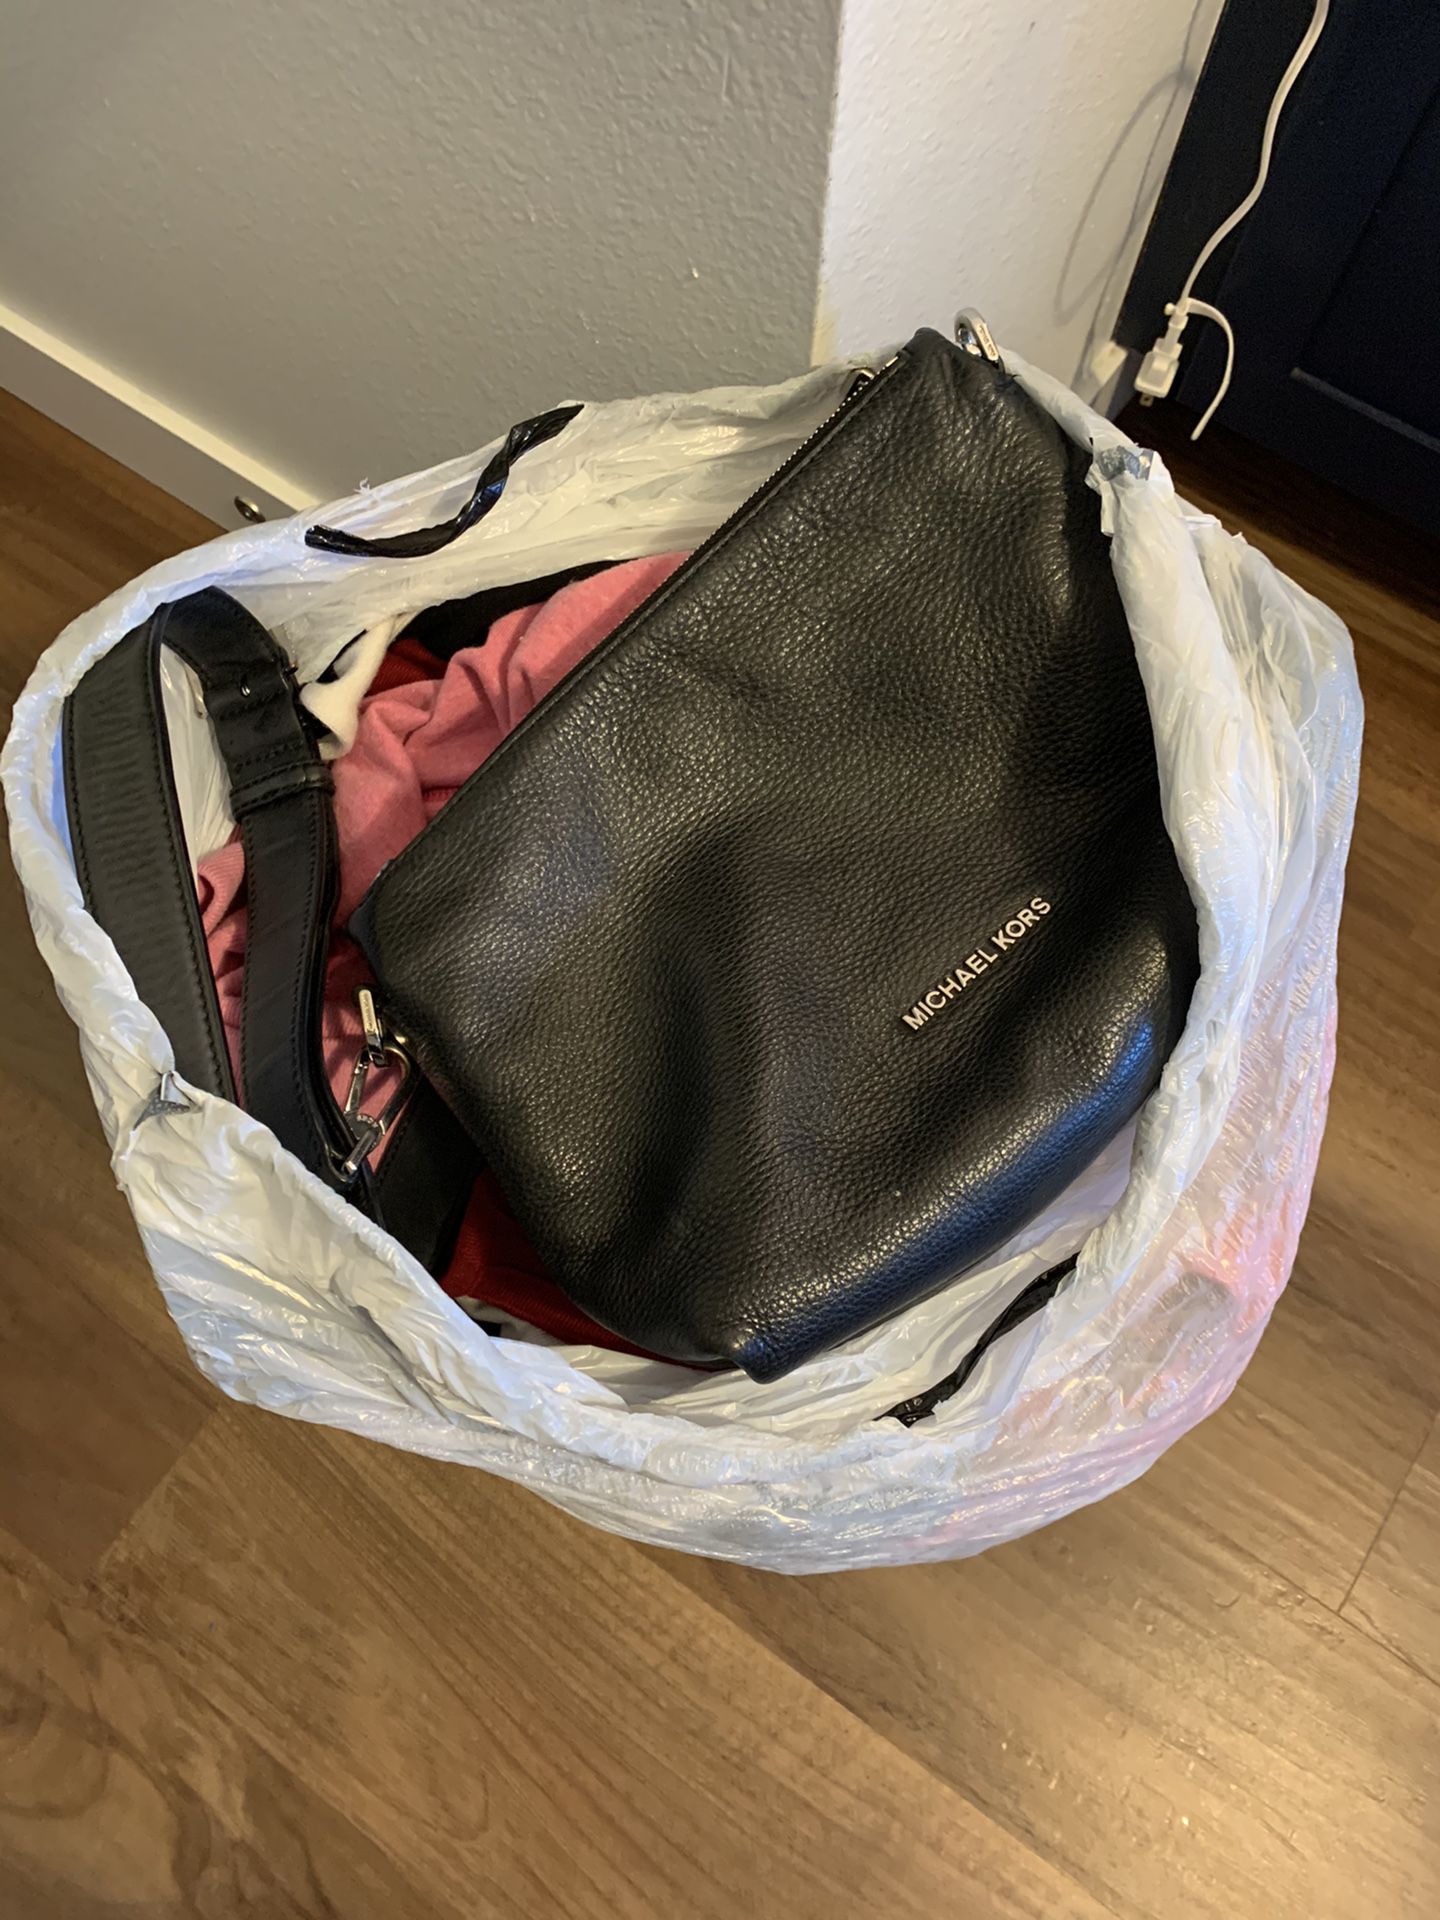 Bag of women’s clothes